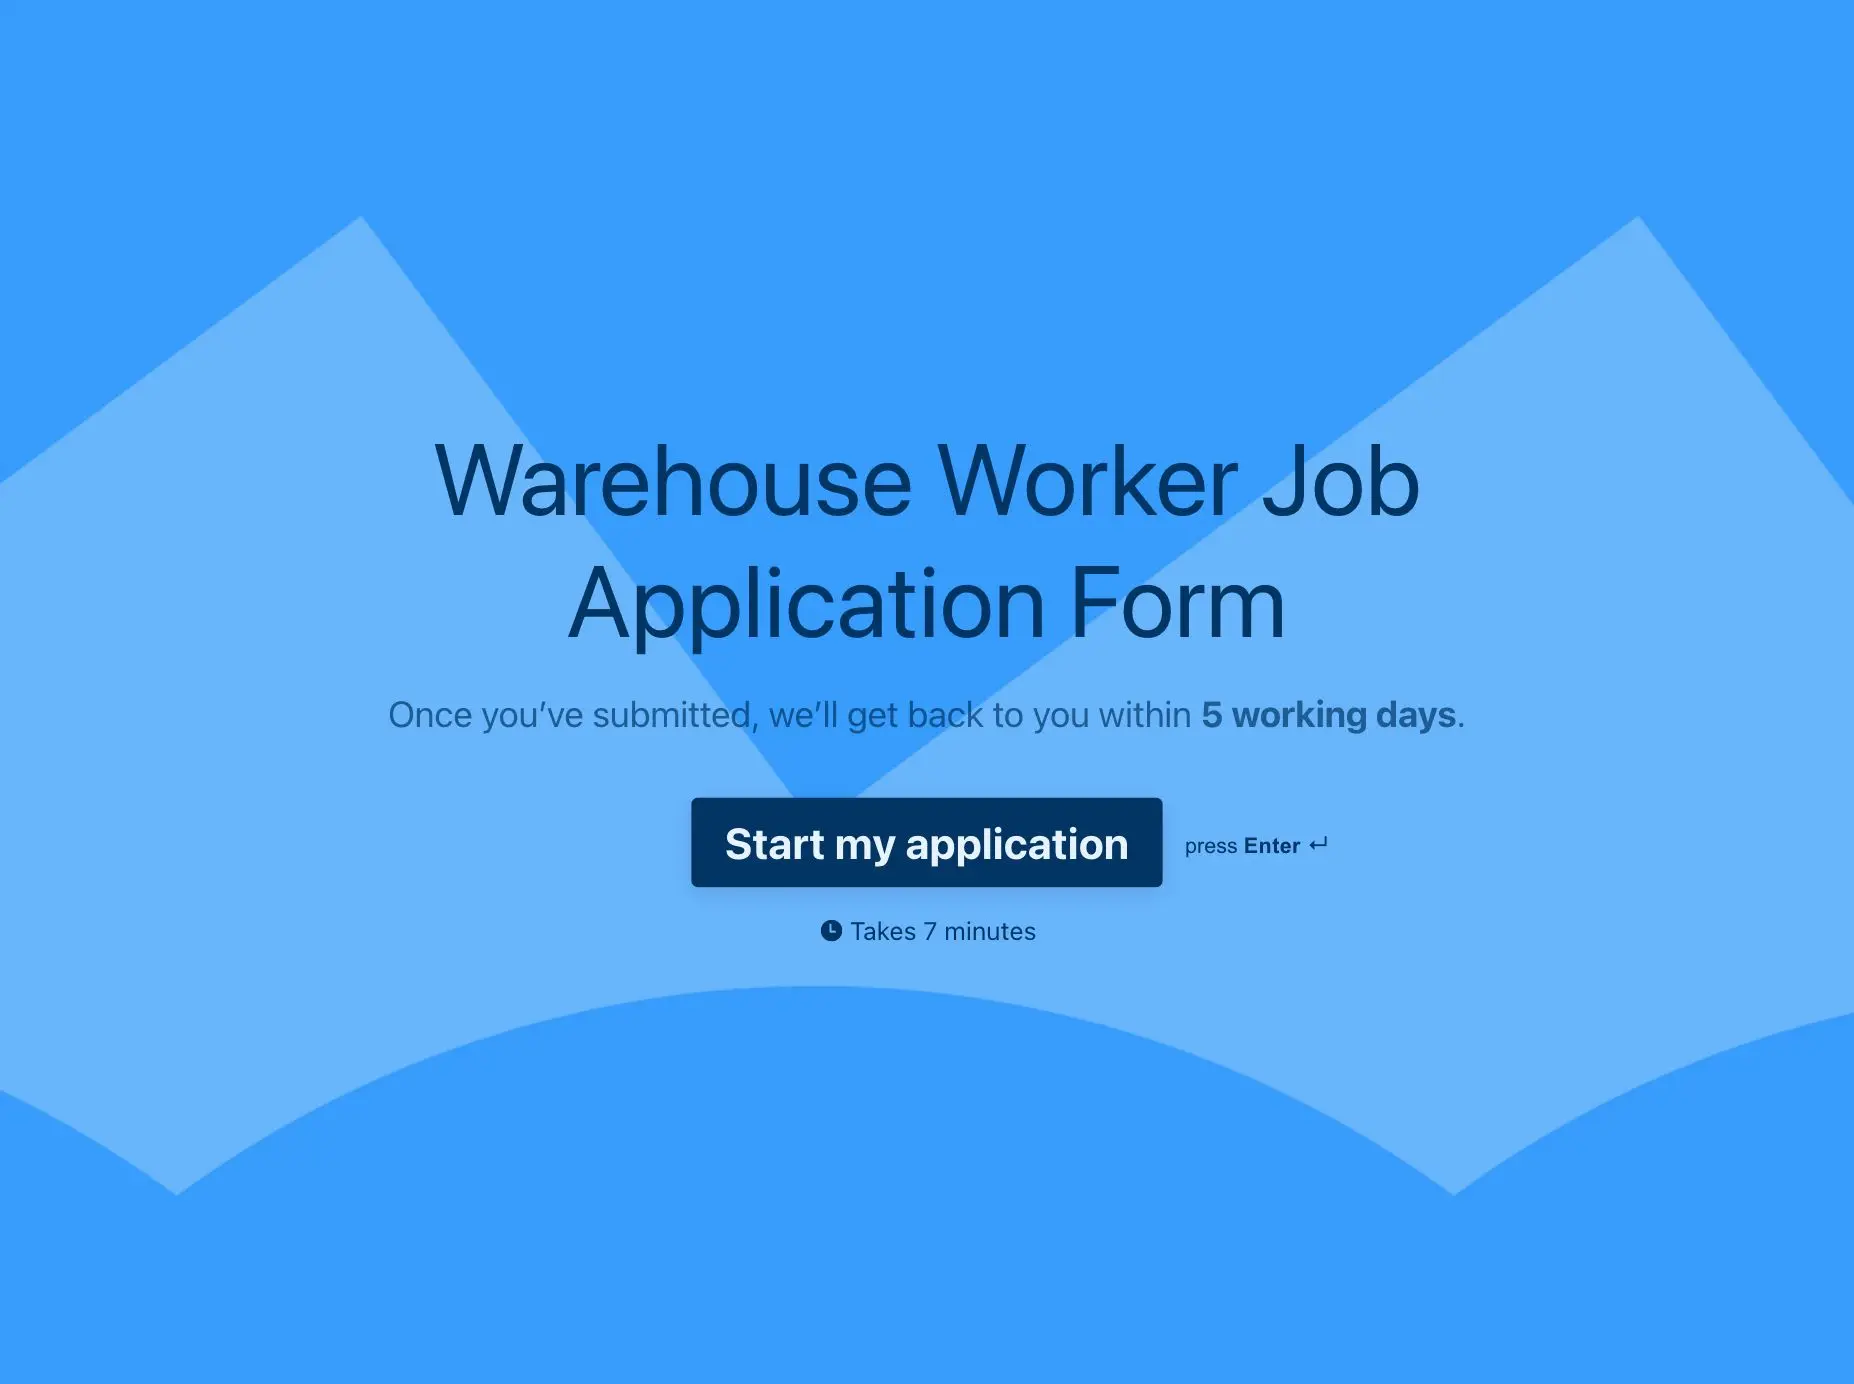 Warehouse Worker Job Application Form Template Hero